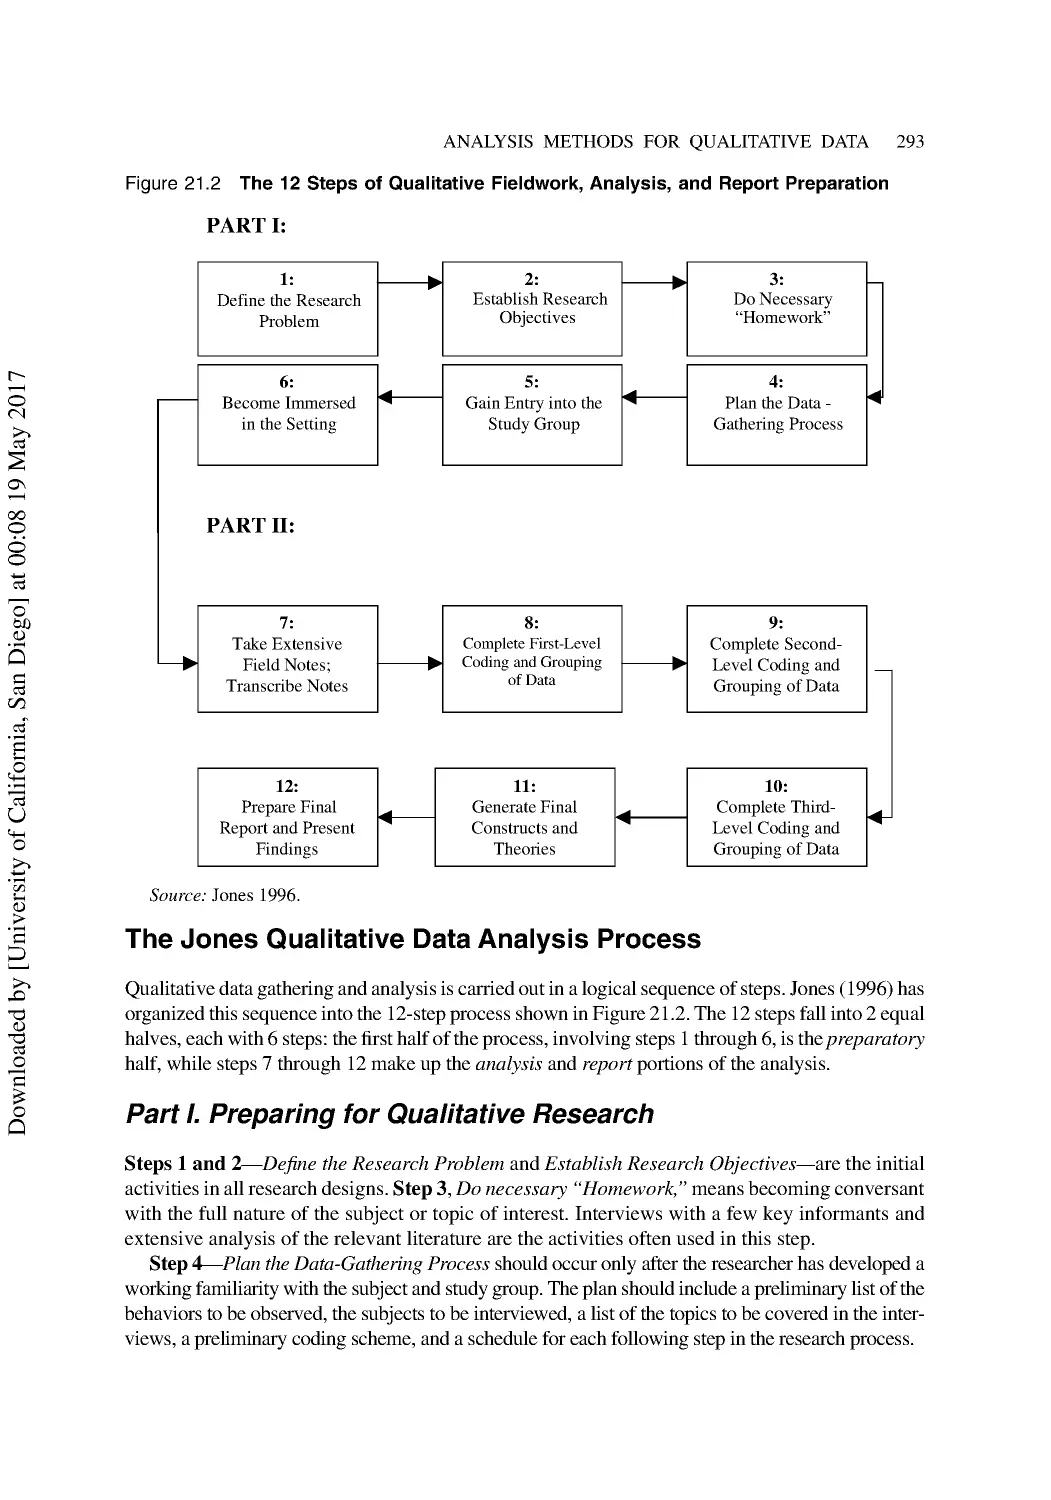 The Jones Qualitative Data Analysis Process